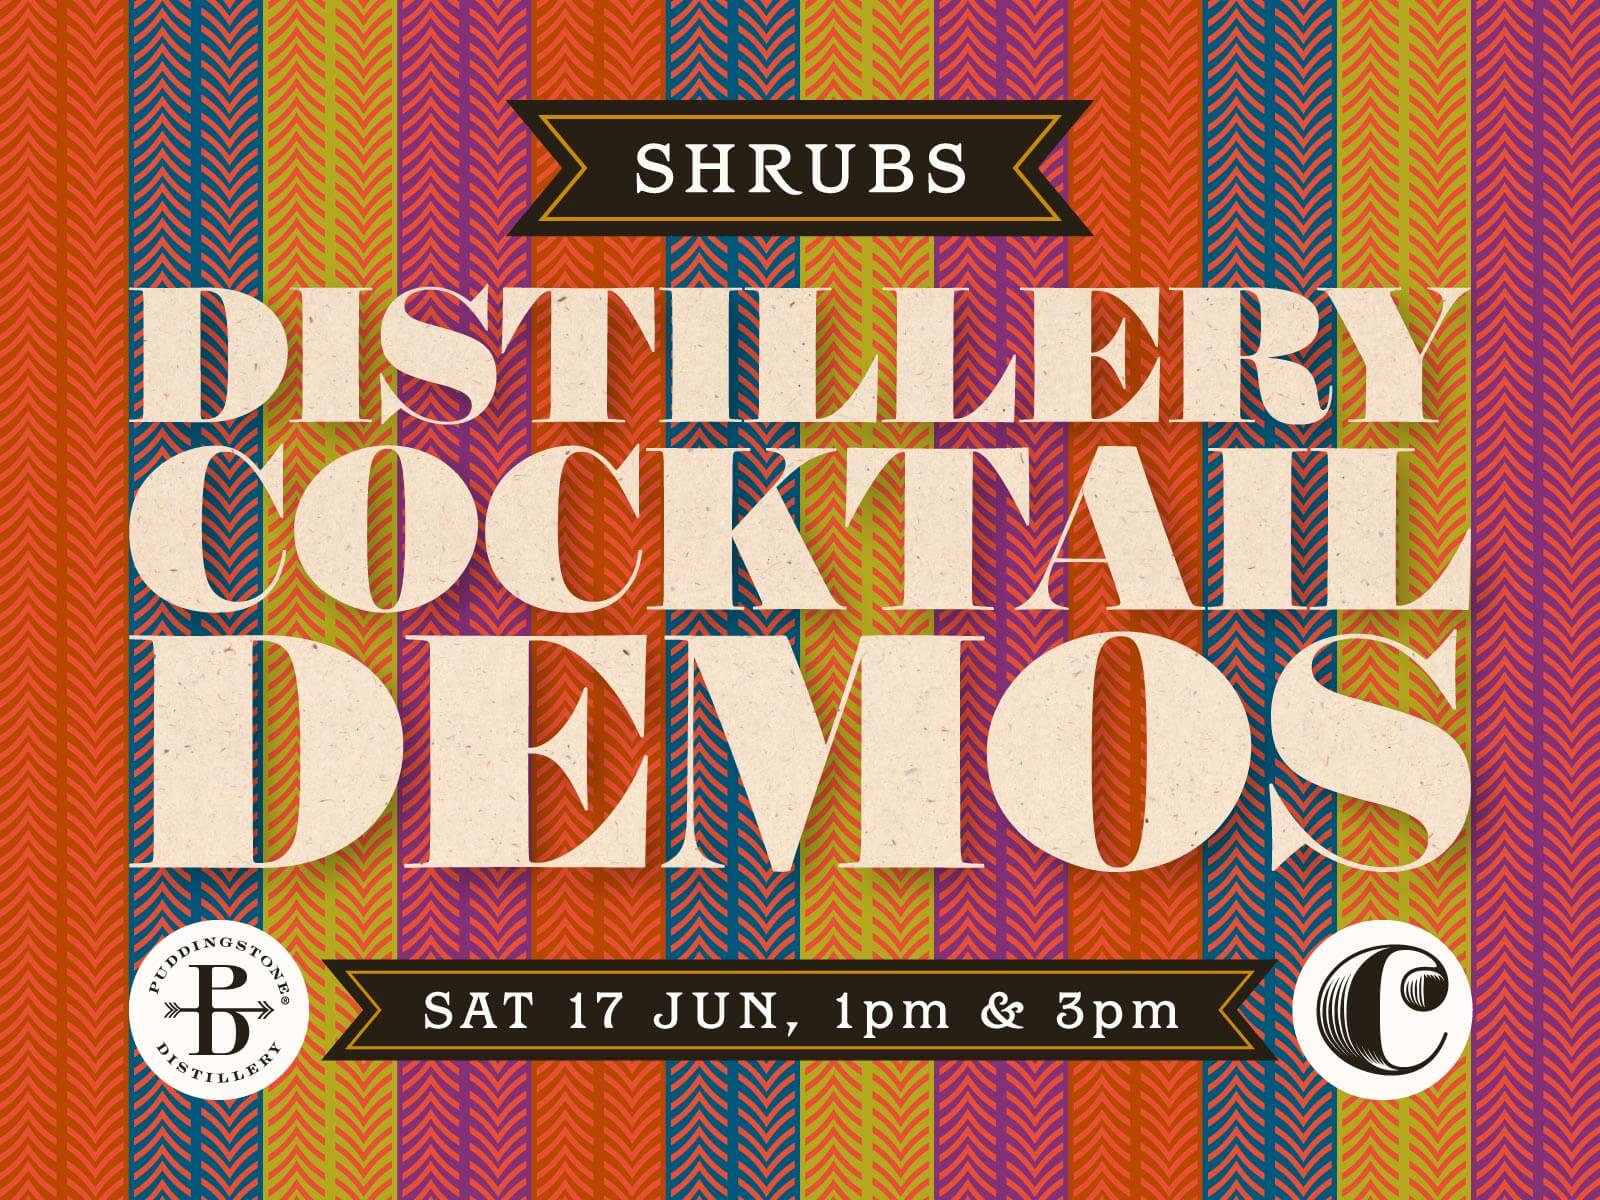 Shrub Distillery Cocktail Demo